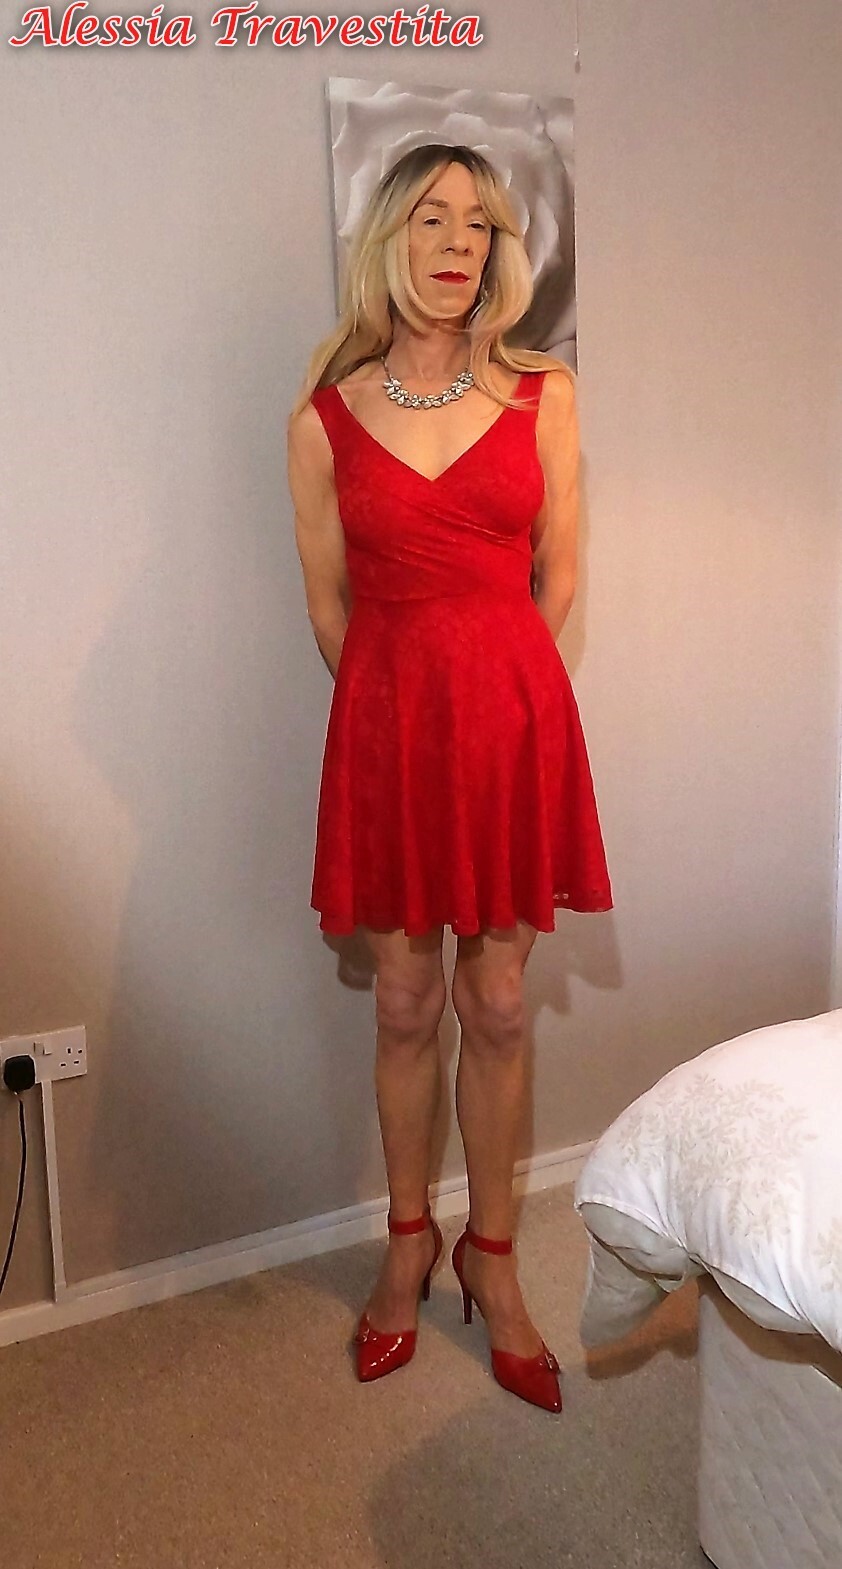 65 Alessia Travestita In Flirty Red Dress Photo 3